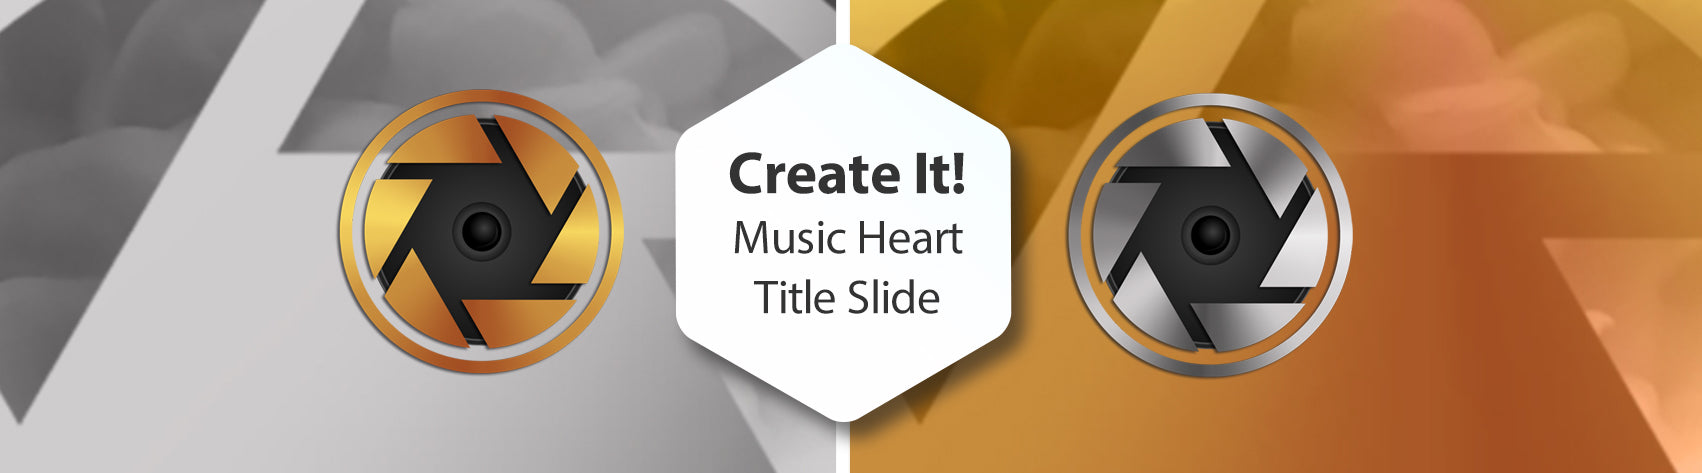 Create It! A Music Heart Title Slide